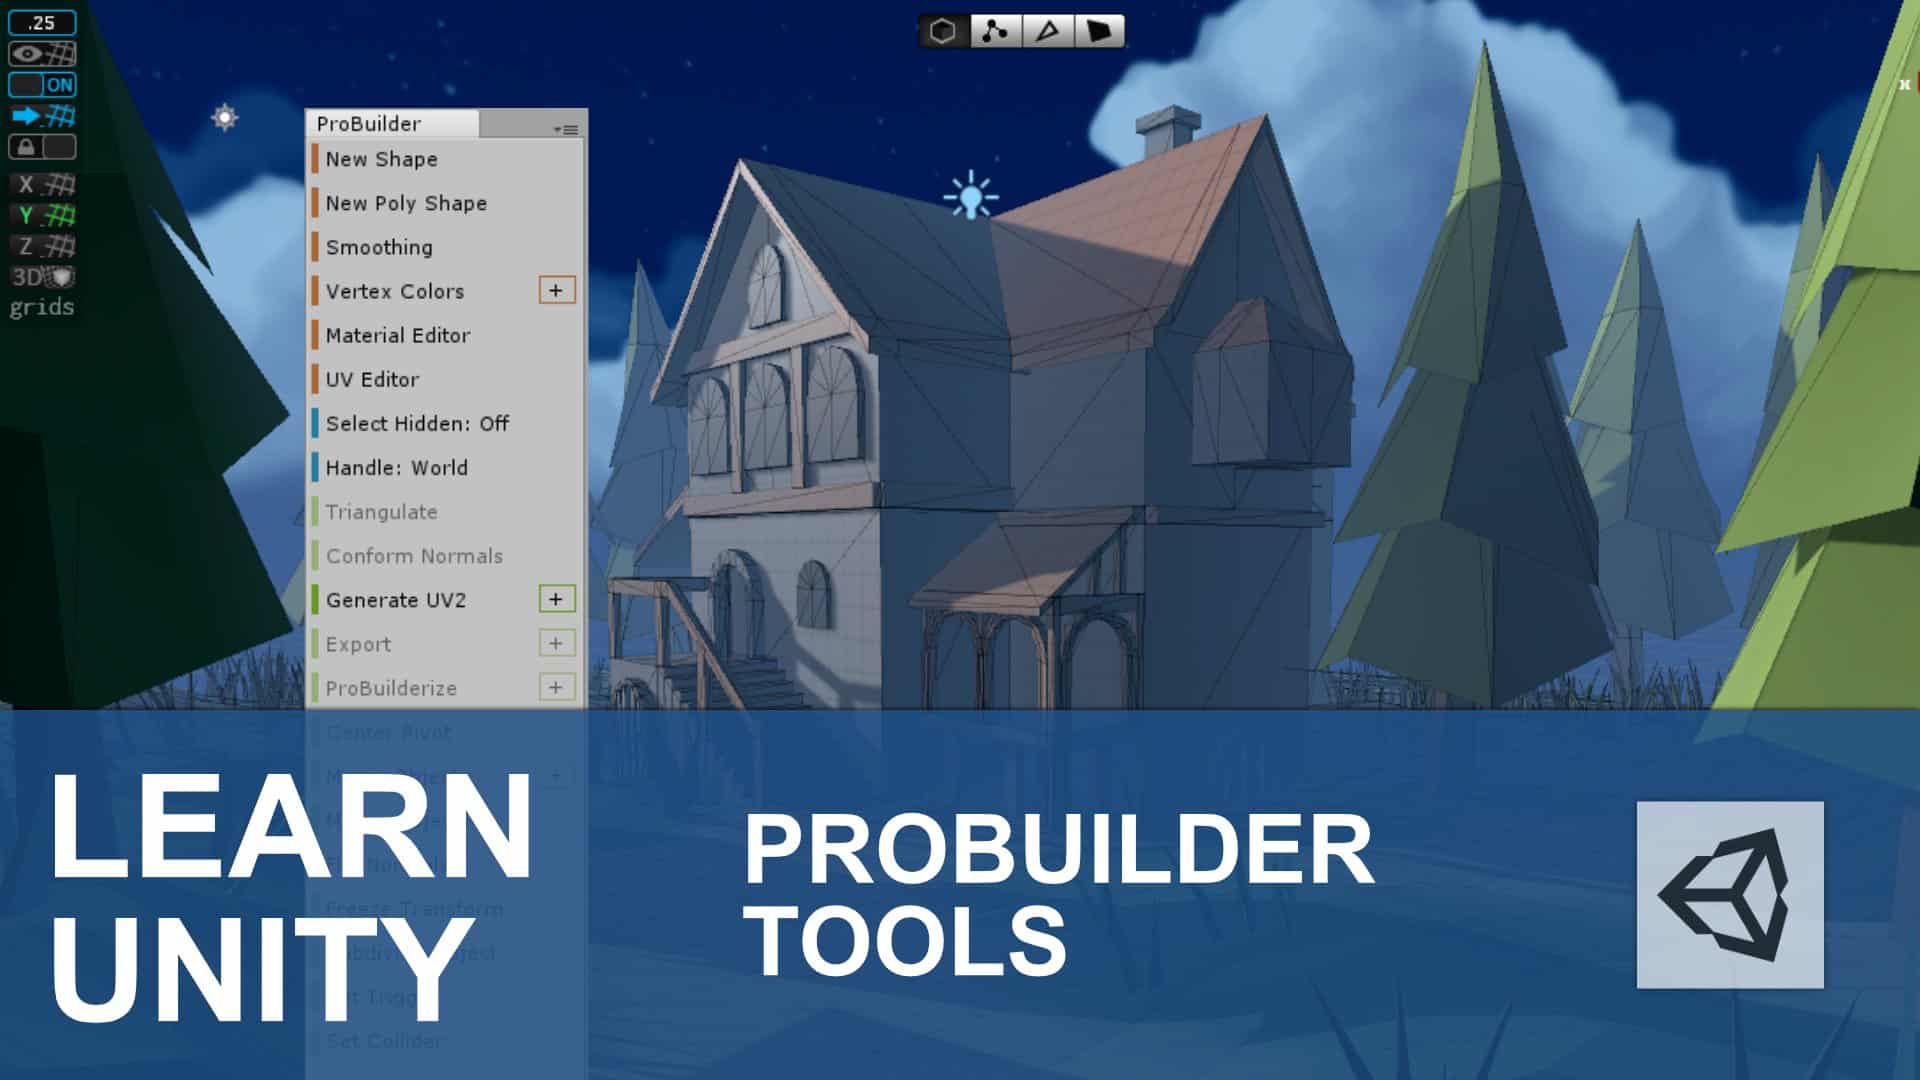 [Skillshare] The Unity 3D Probuilder Essentials Course